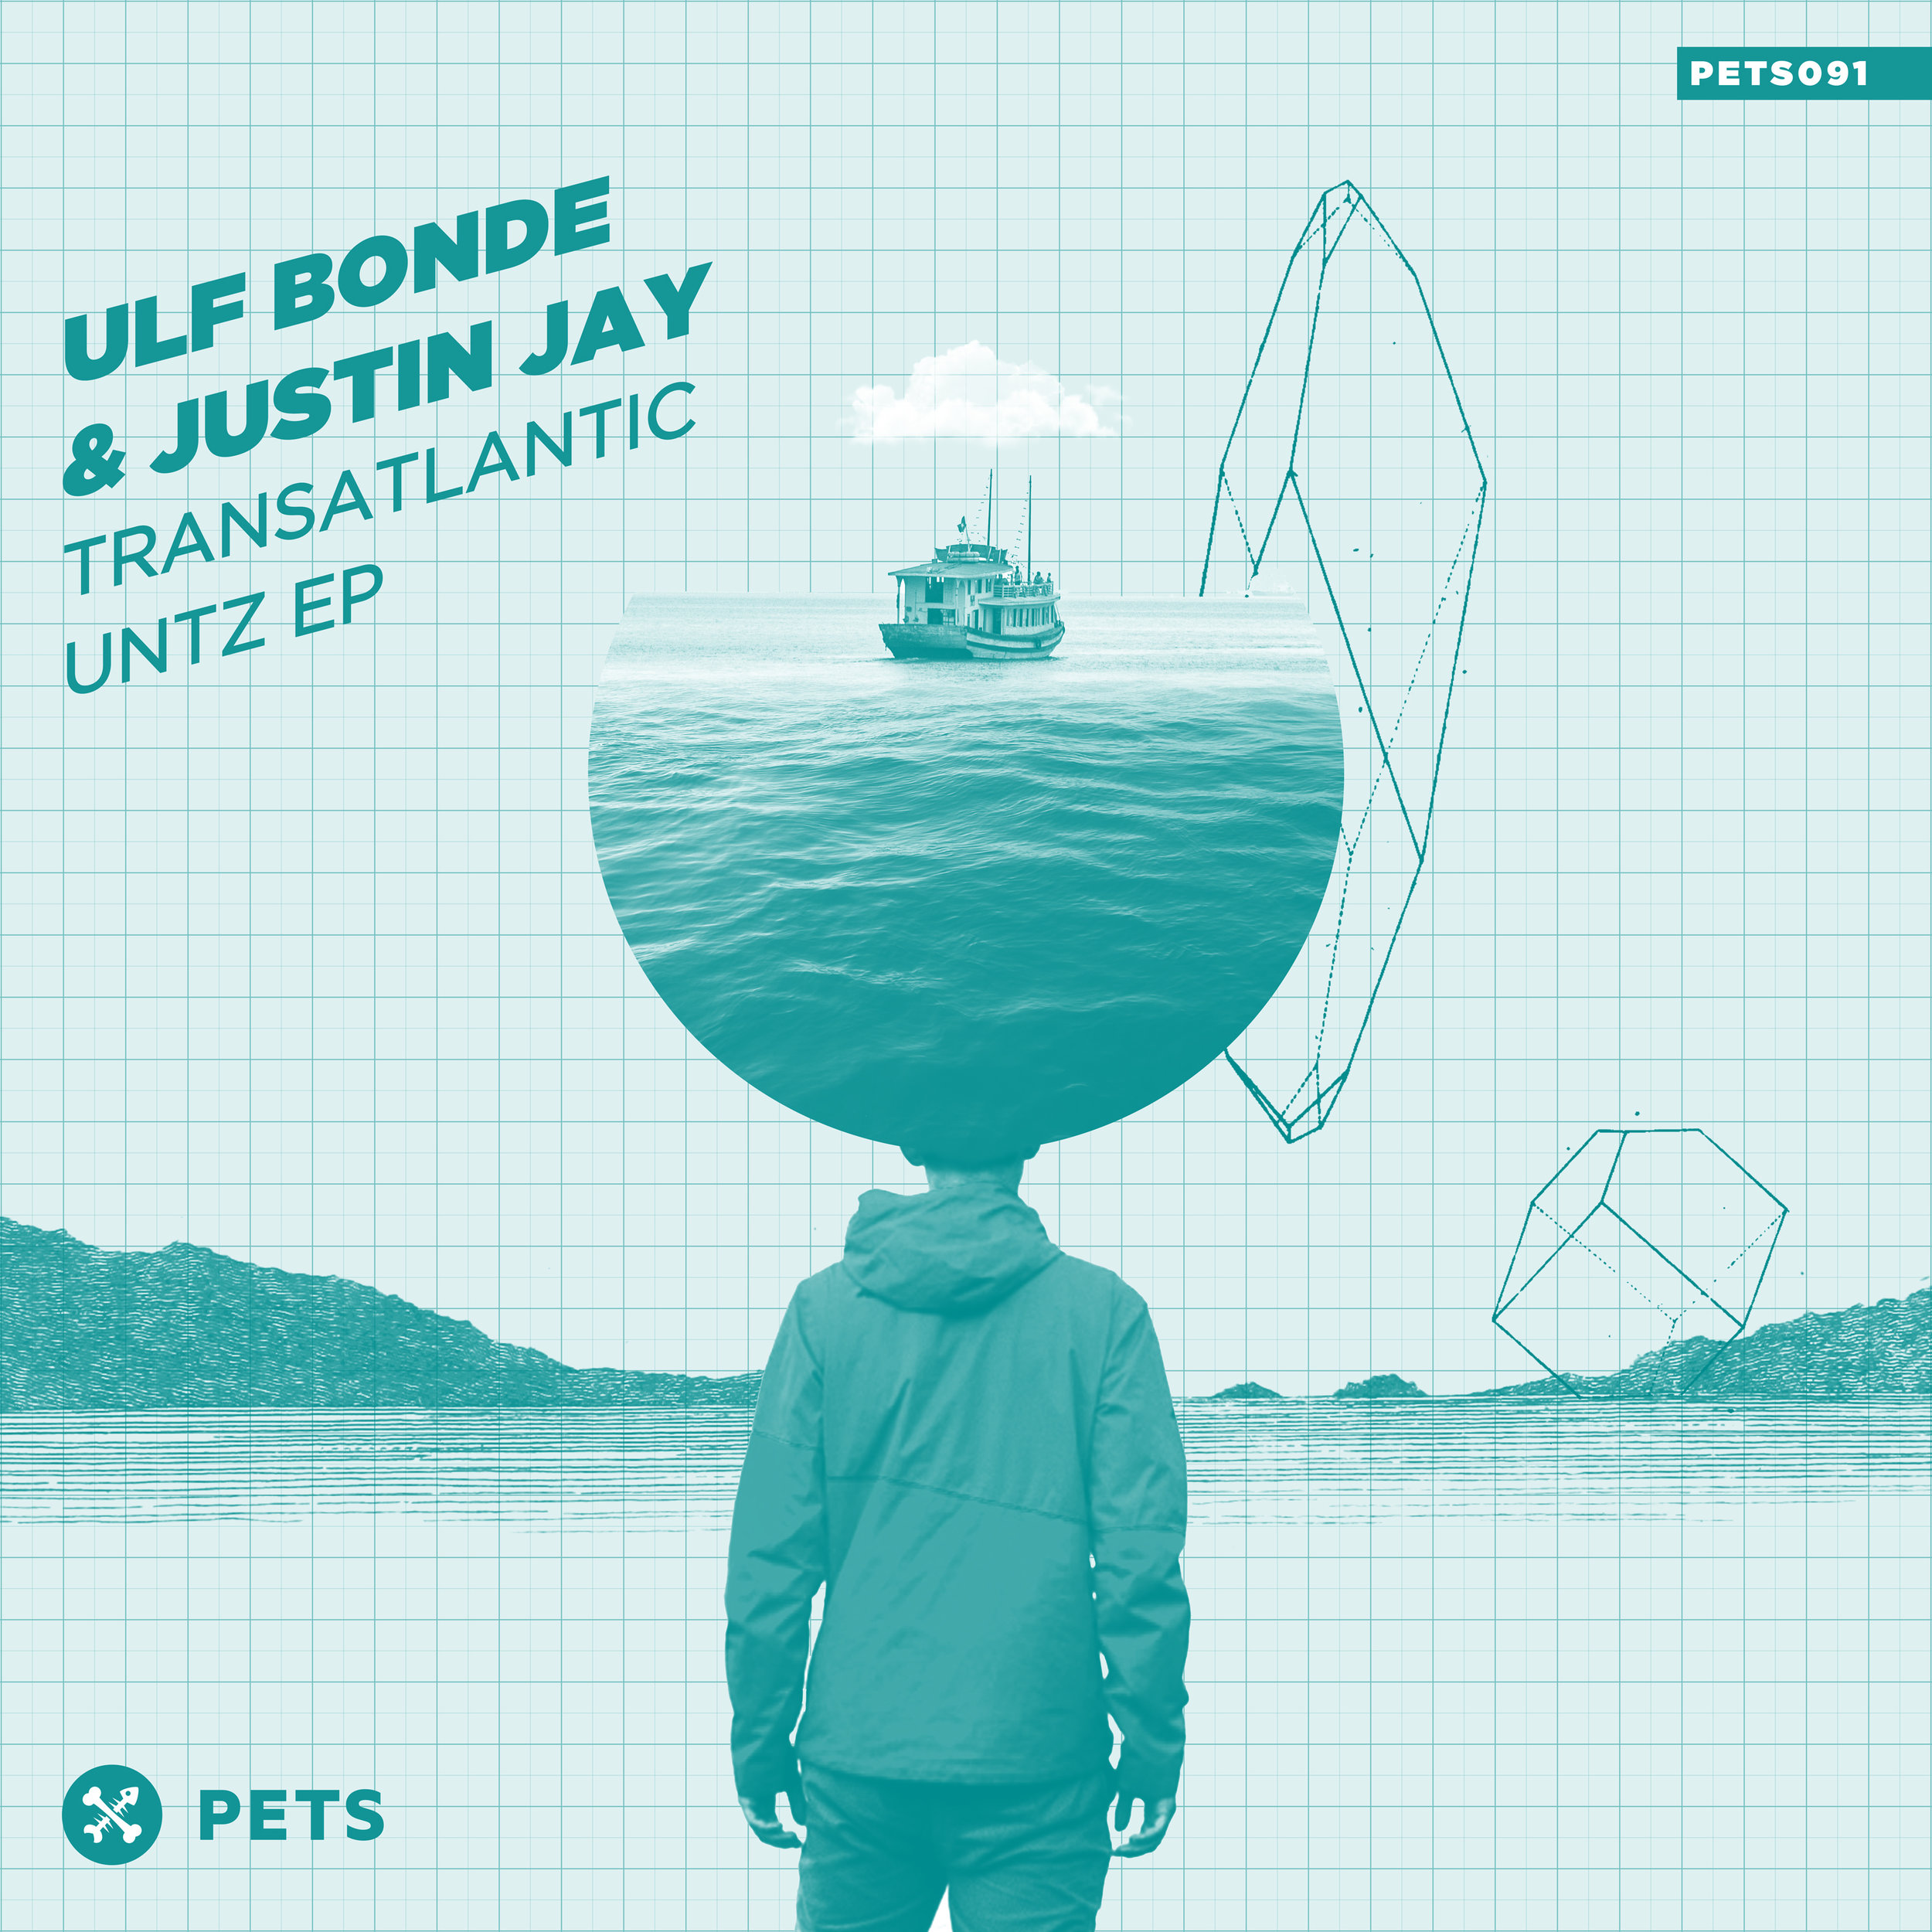 Ulf Bonde & Justin Jay - Transatlantic Untz EP [PETS091]